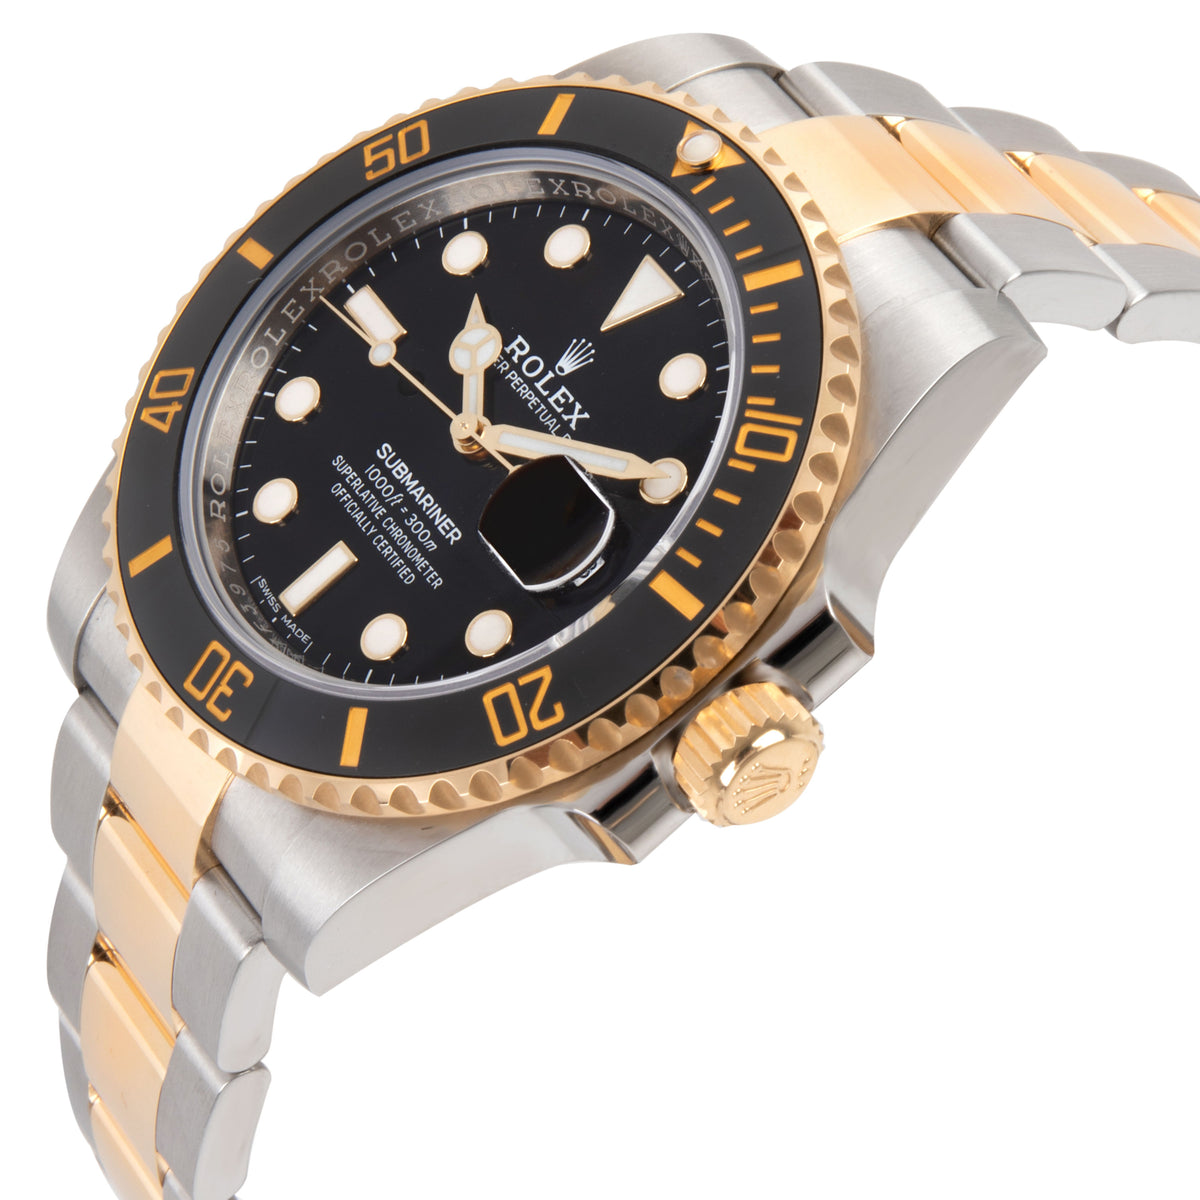 Rolex Submariner 116613LN Men's Watch in 18kt Stainless Steel/Yellow Gold